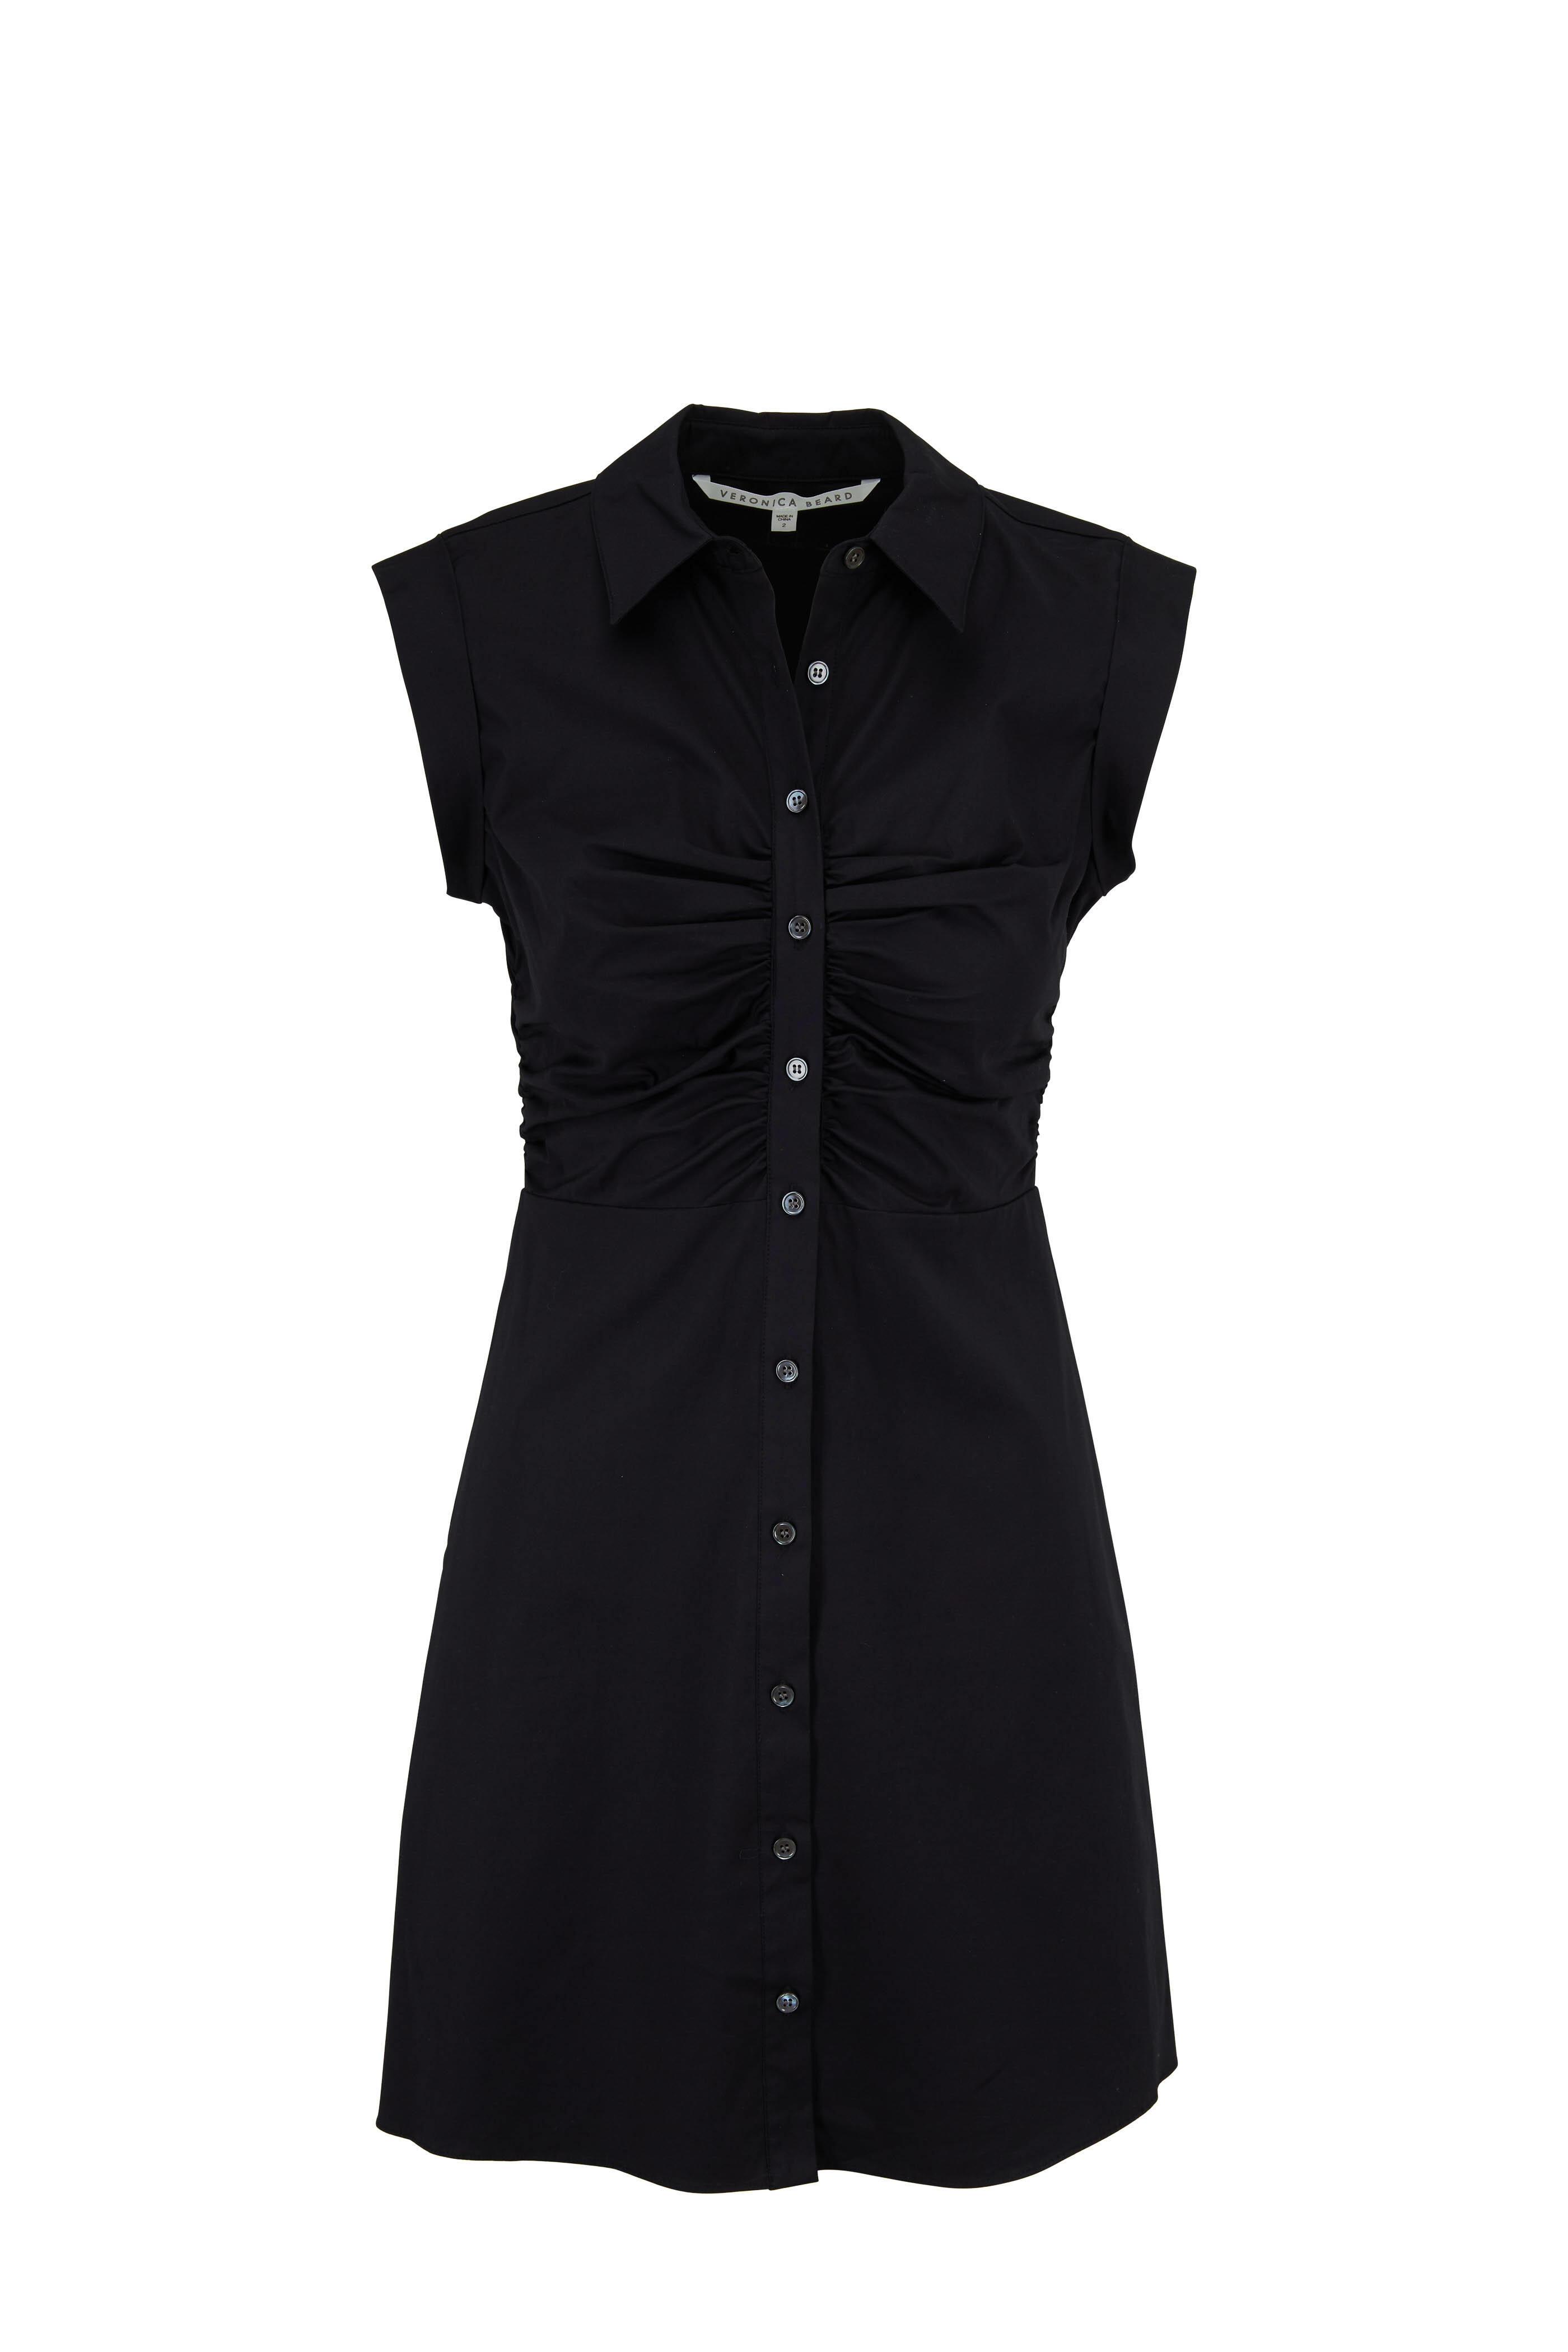 Veronica Beard - Wixson Black Multi Midi Dress